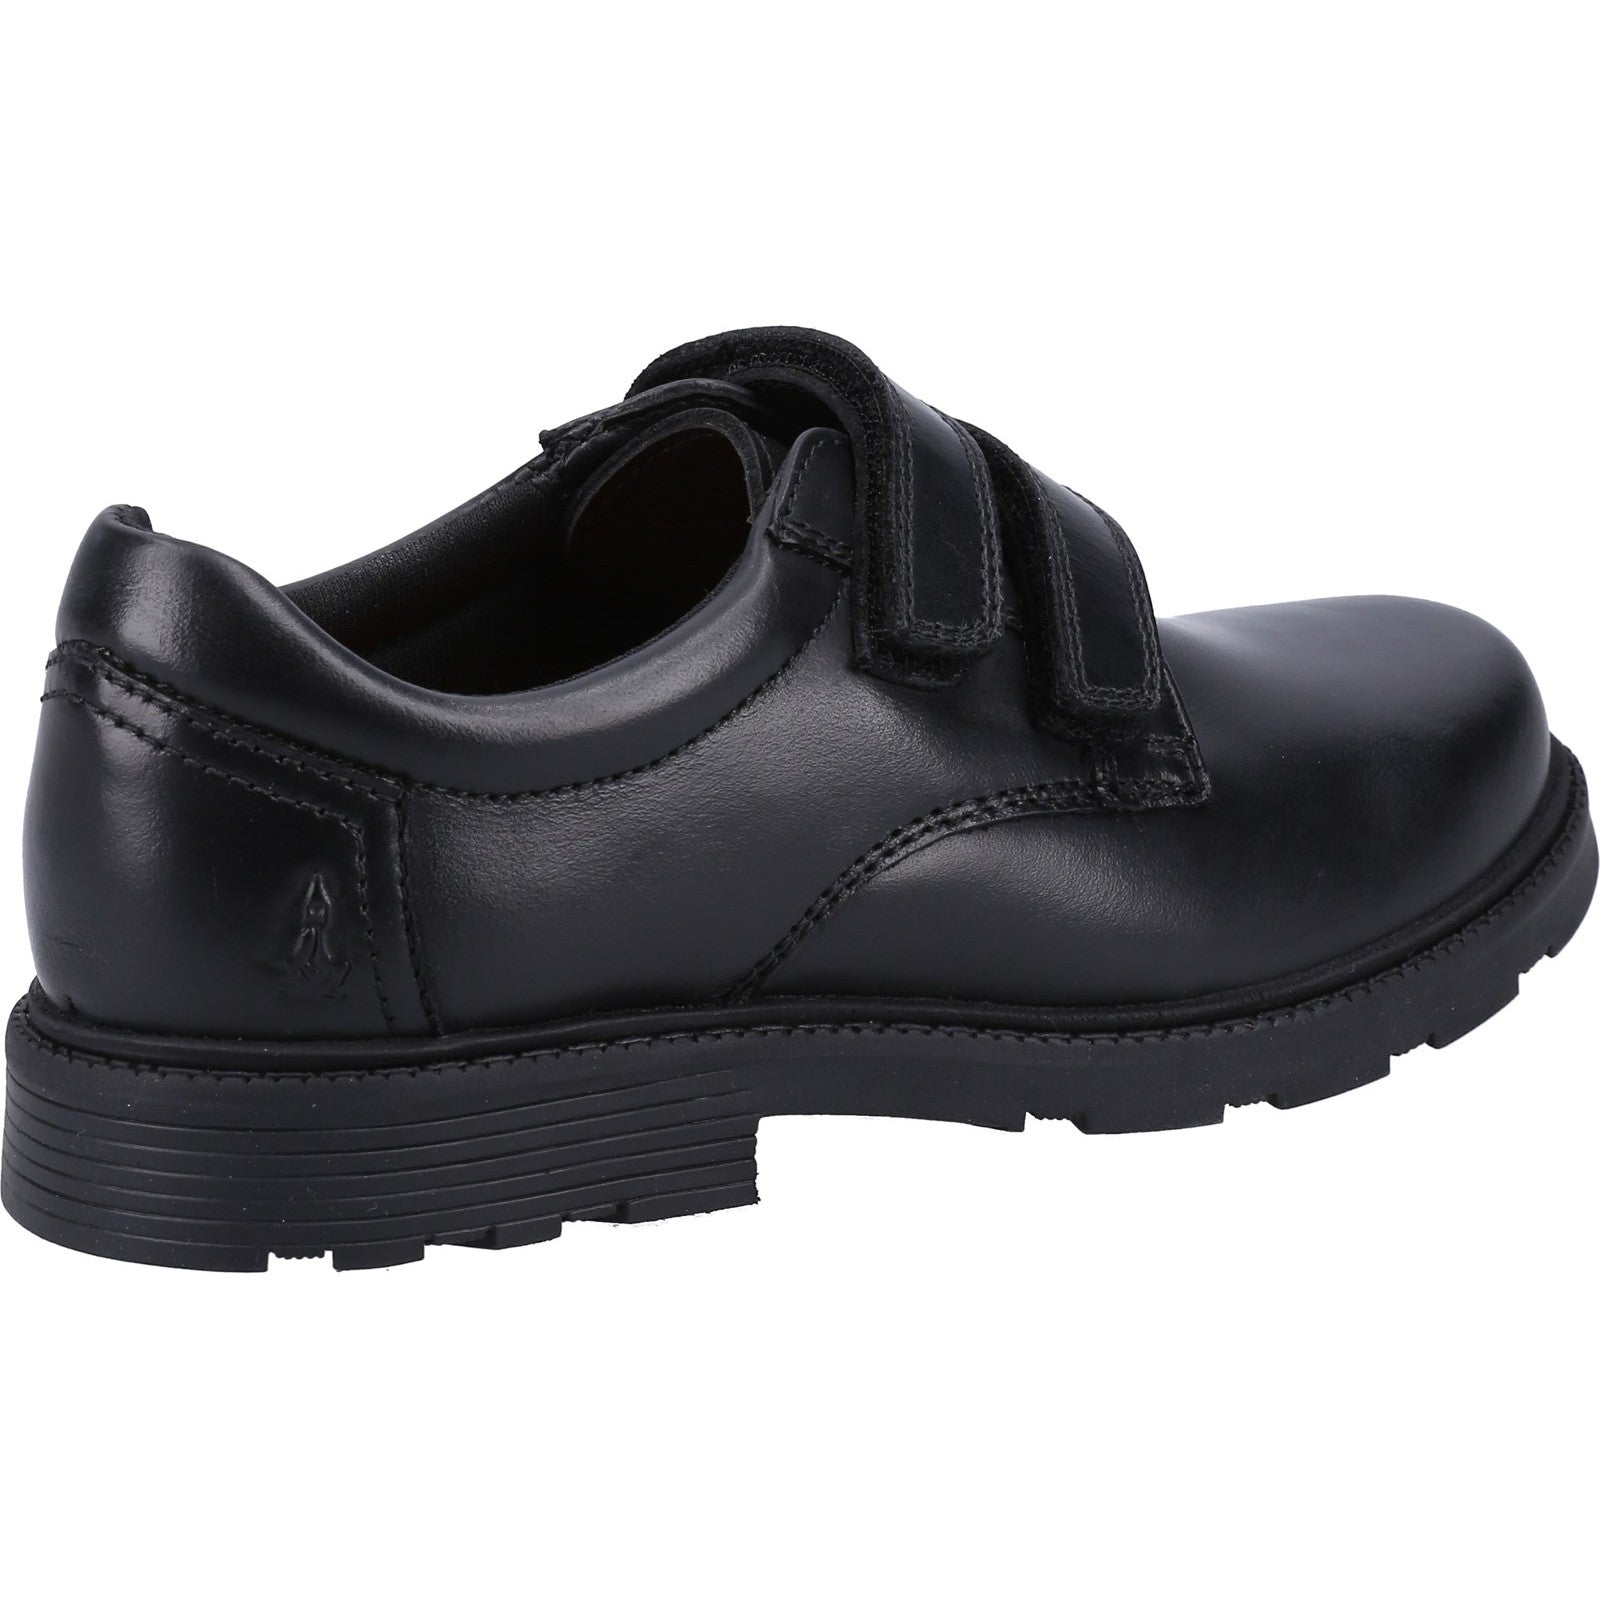 Hush Puppies Boys Logan Leather School Shoes - Black